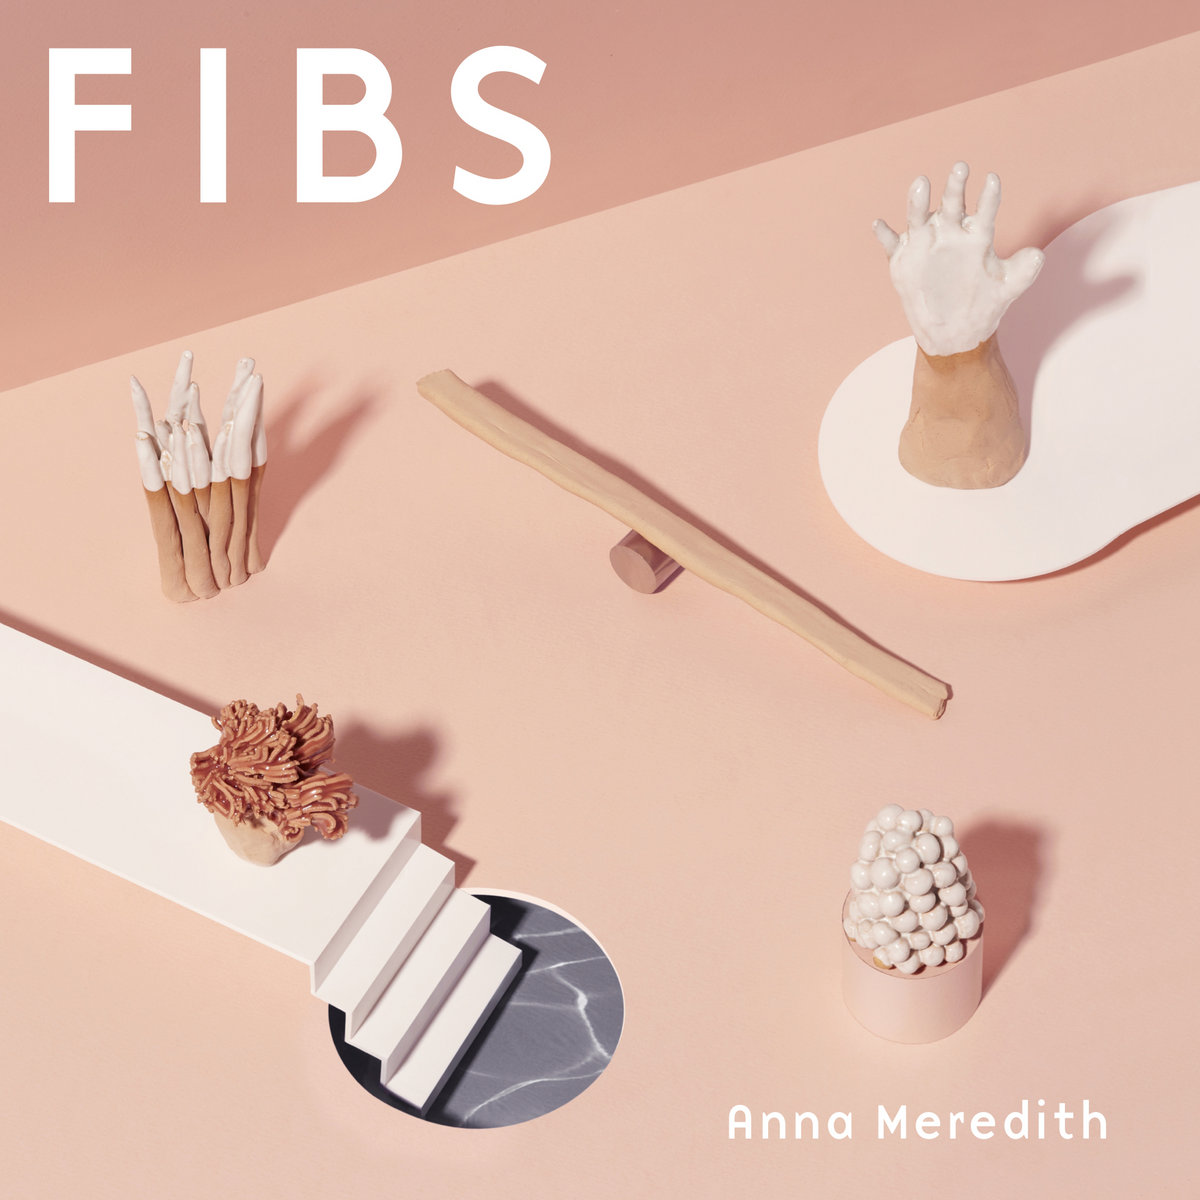 Anna Meredith — Bump cover artwork